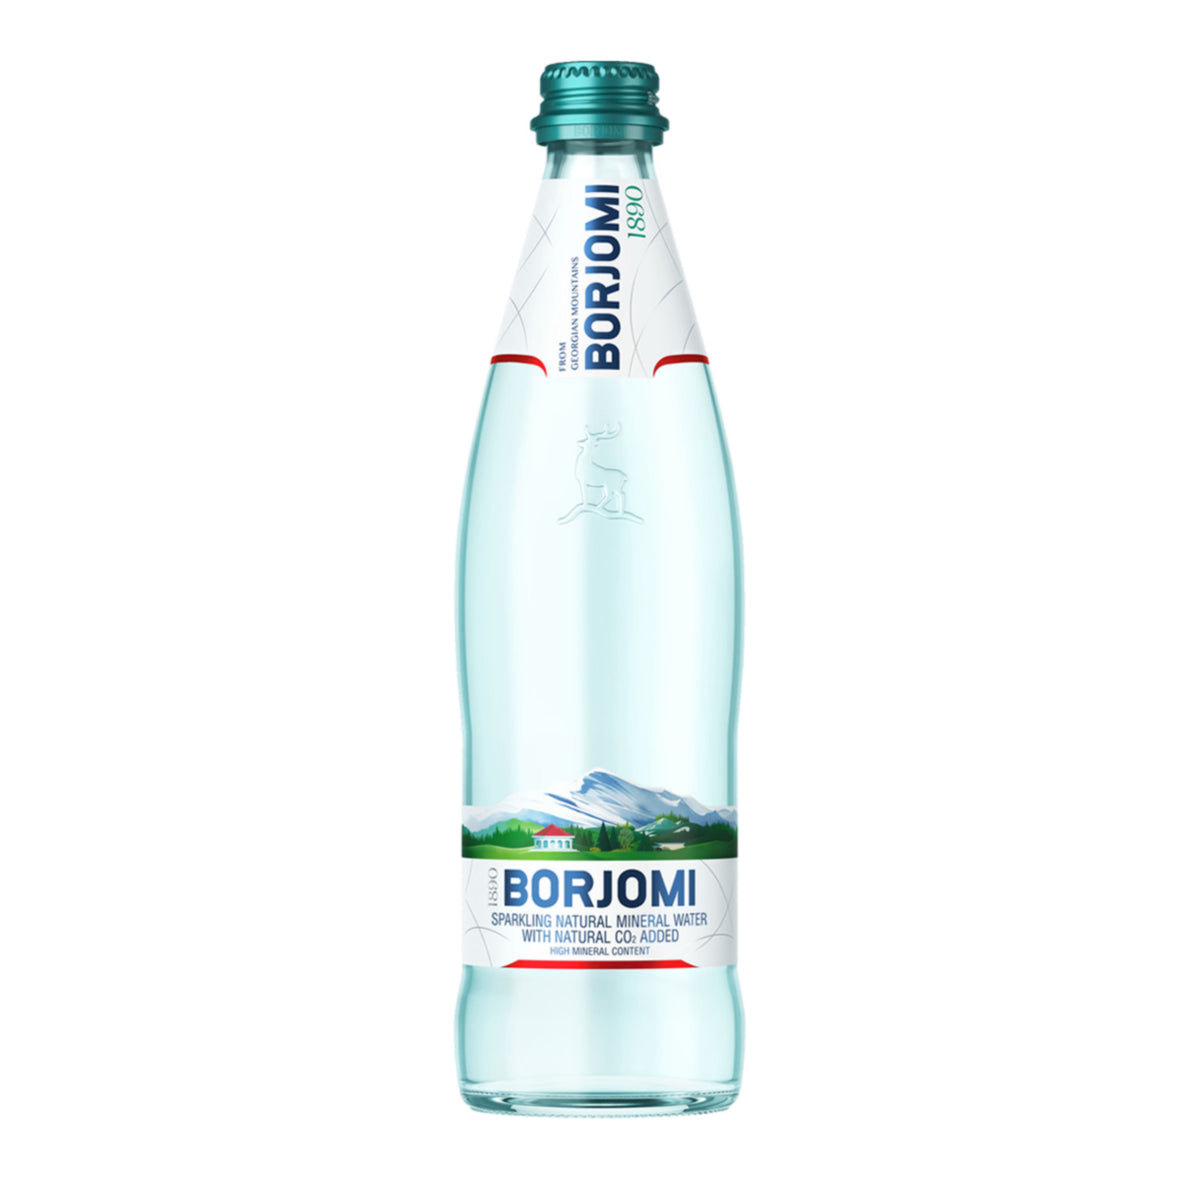 Borjomi Sparkling Water, 16.9 Fl. Oz. Glass Bottles (12 Pack)